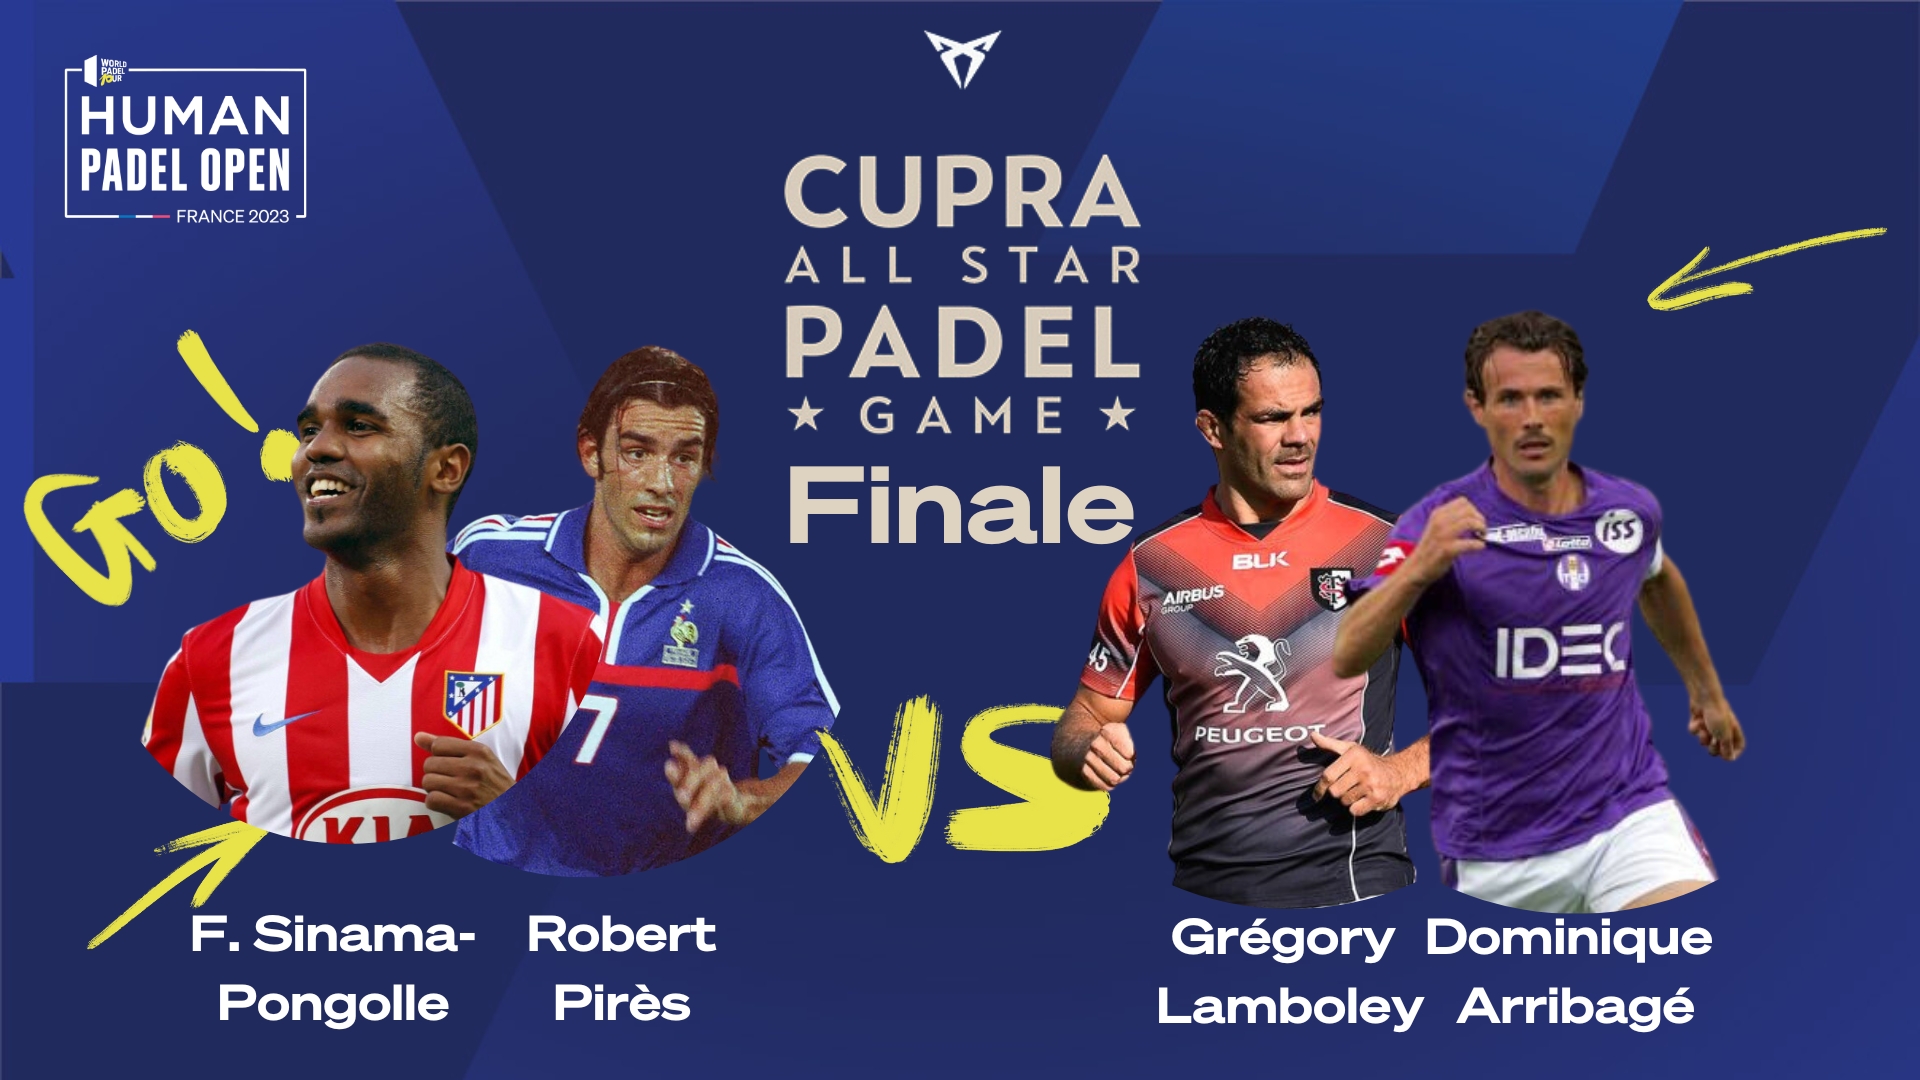 Alle Padel Starspiel: das Sinama-Pongolle-Finale / Pires vs. Lamboley / Arribagé